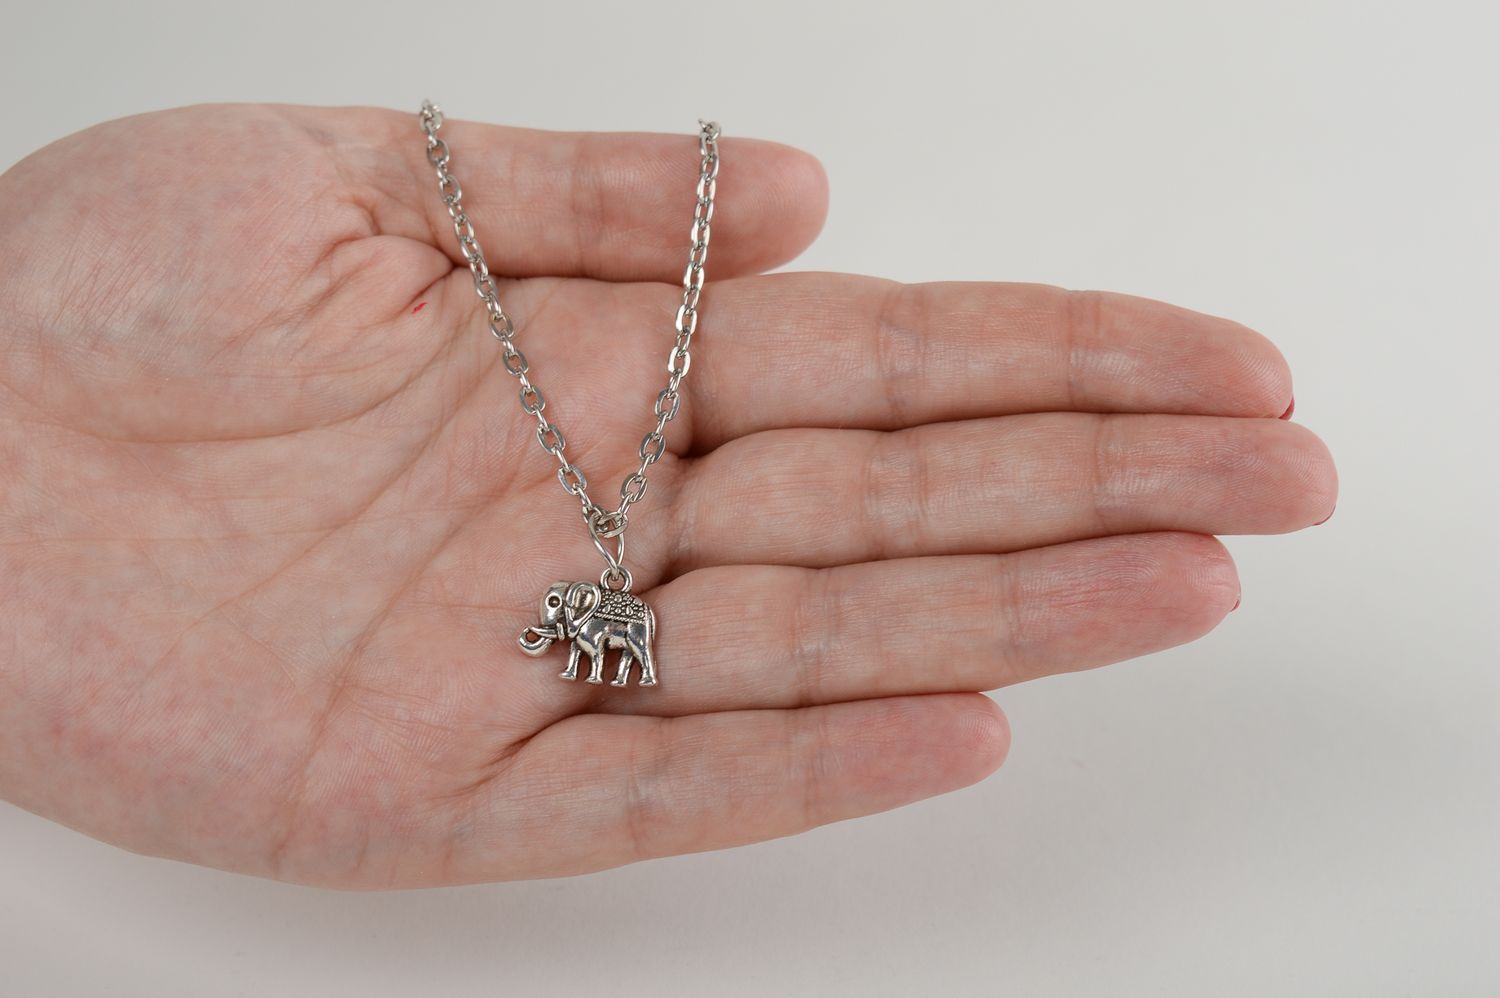 Handmade pendant little elephant metal pendant design accessories women gift photo 5